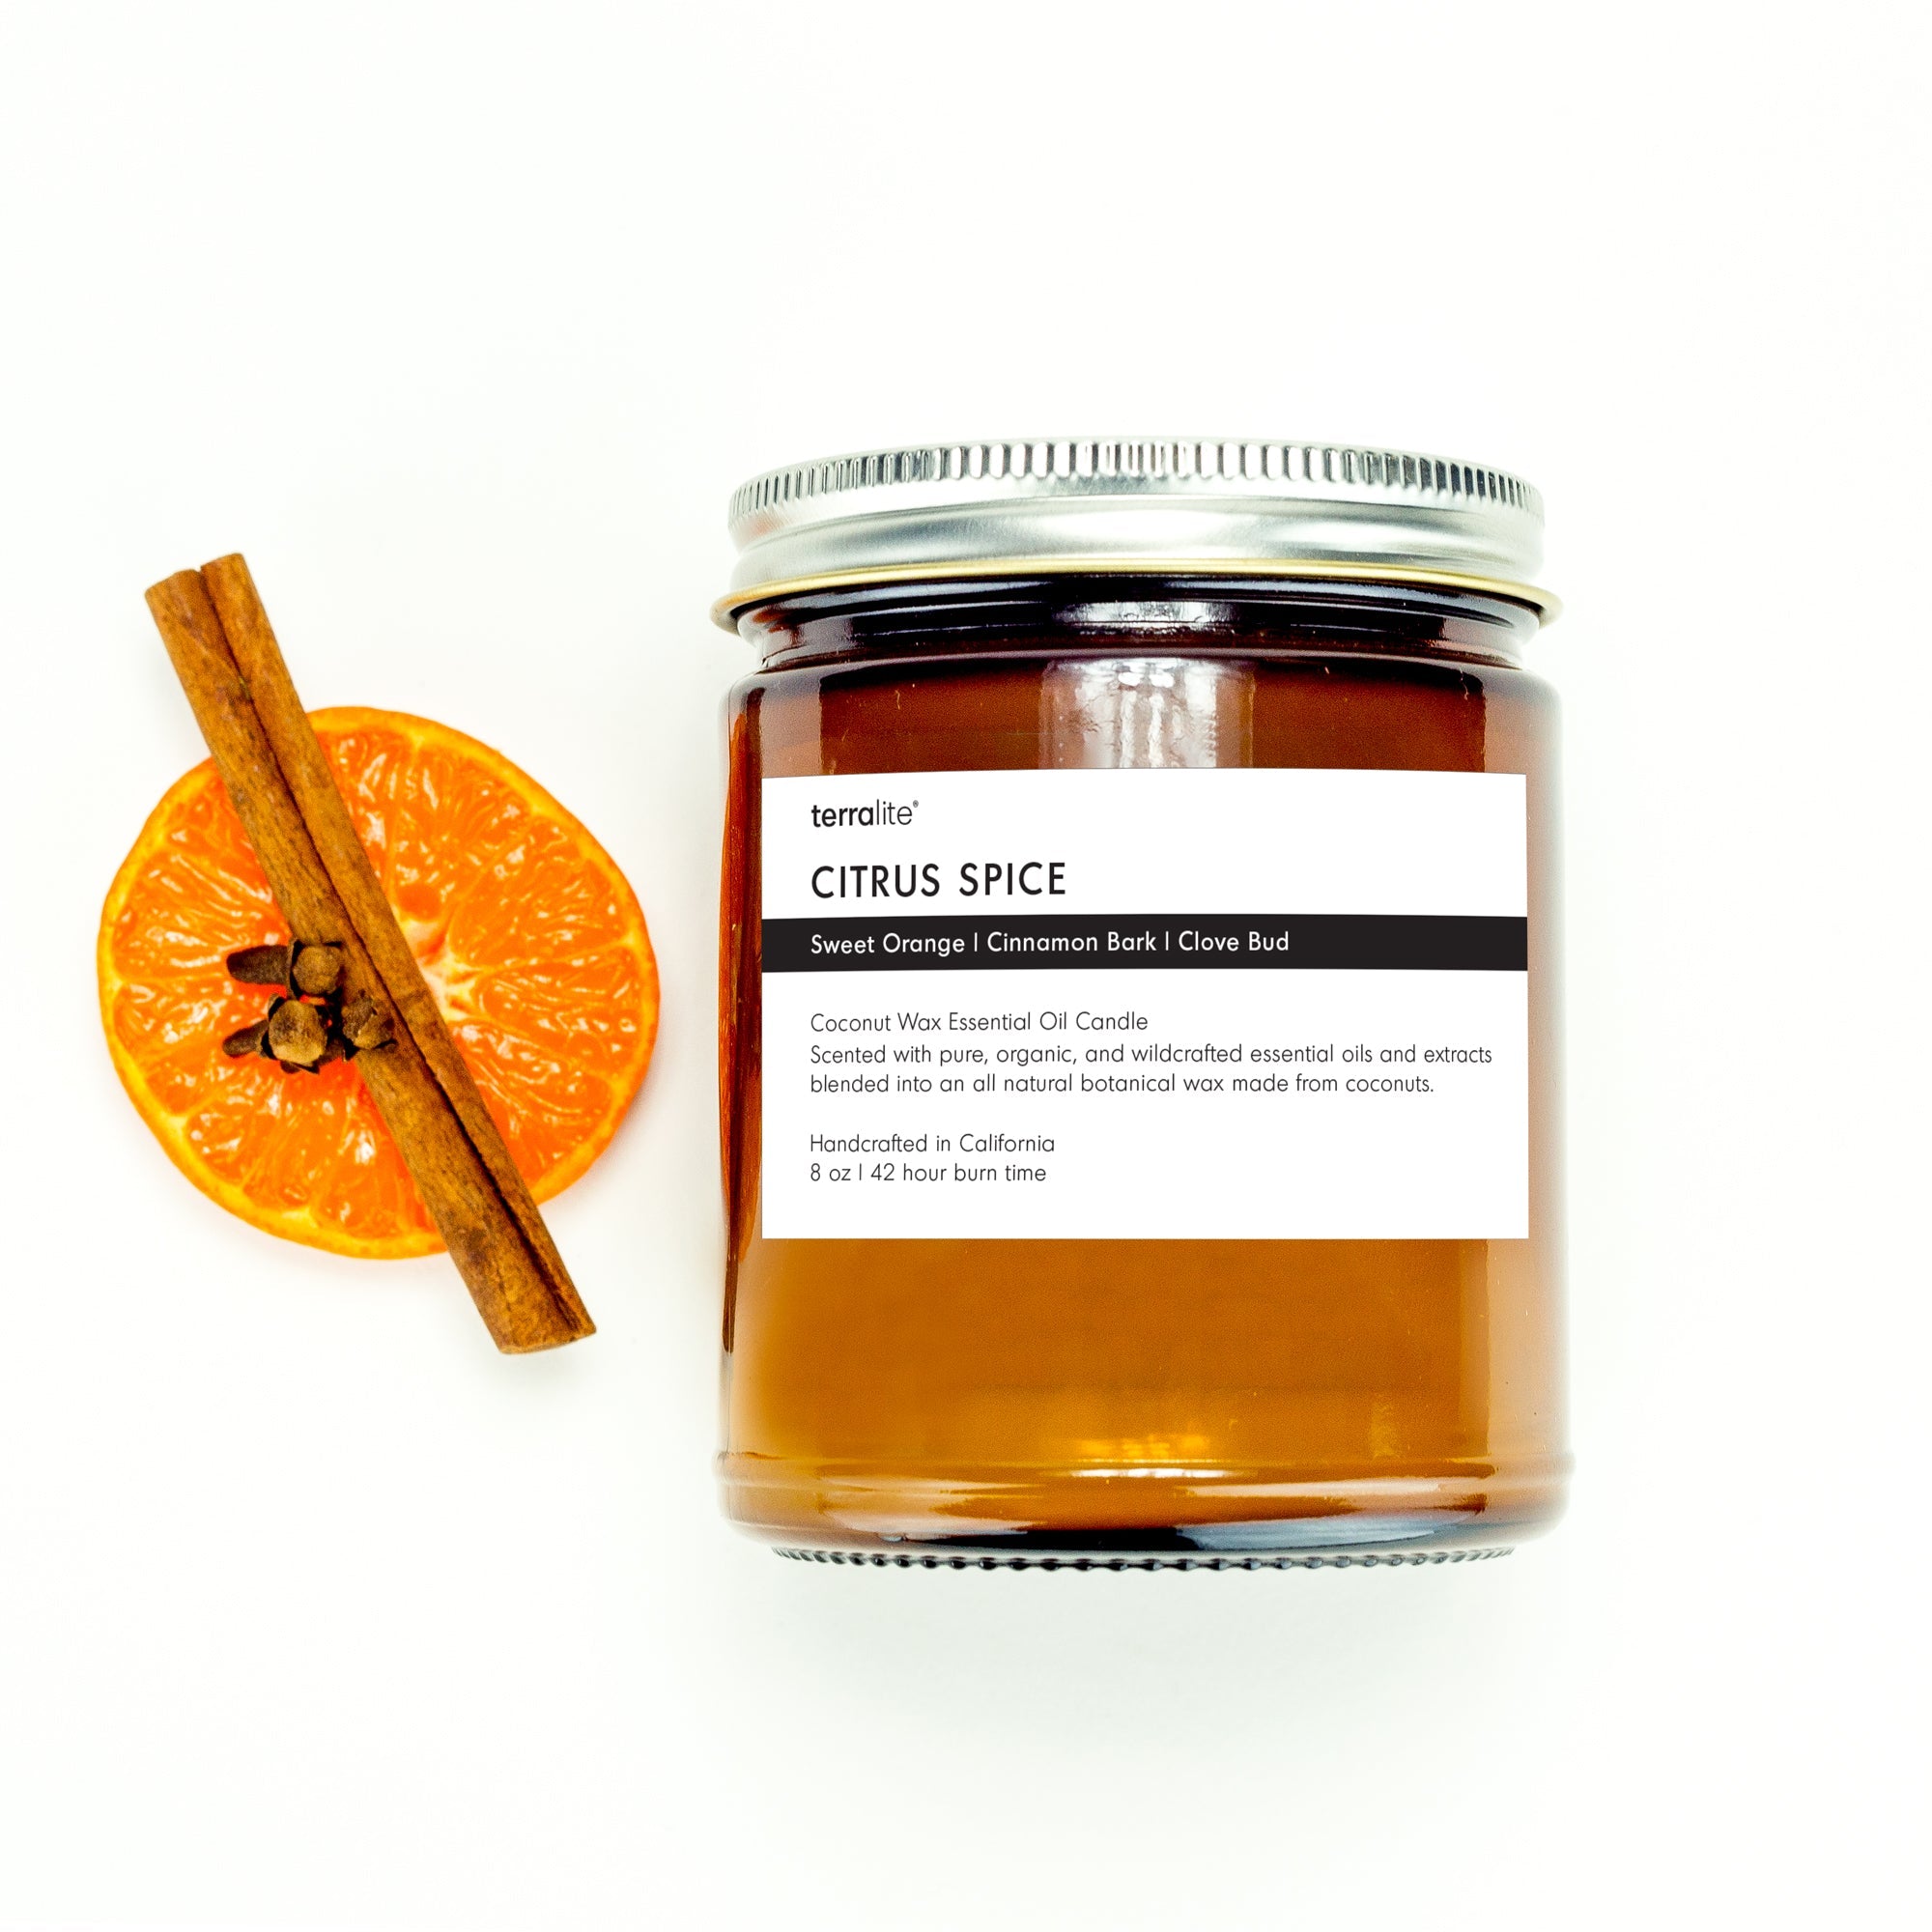 Citrus Spice essential oil candle scented with sweet orange, cinnamon, clove essential oils.